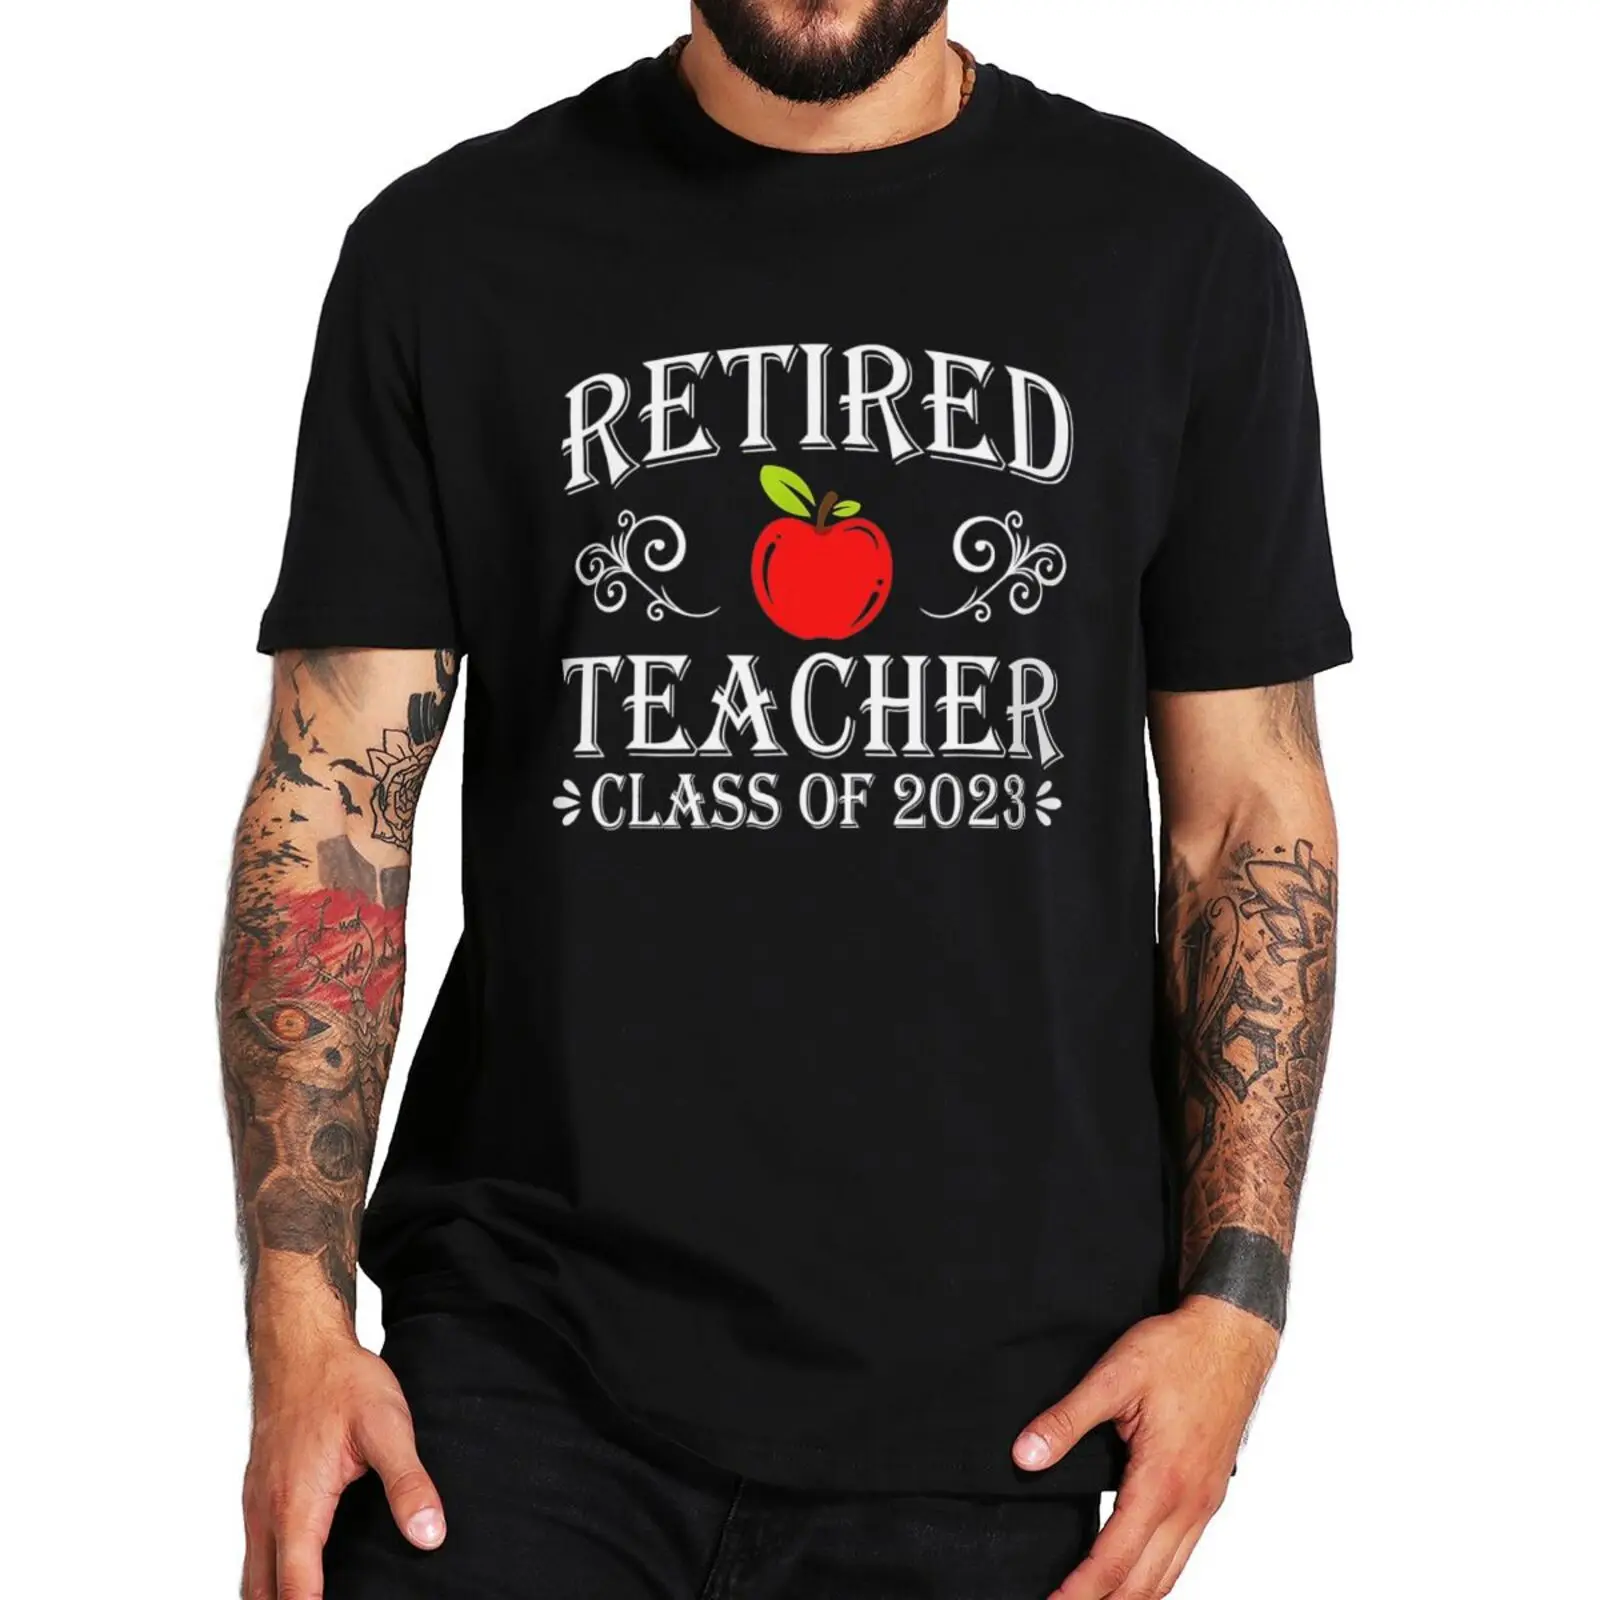 

Retired Teacher Class Of 2023 T Shirt Retirement Funny Gifts T-shirts For Men Women 100% Cotton Unisex O-neck Summer Tee Tops